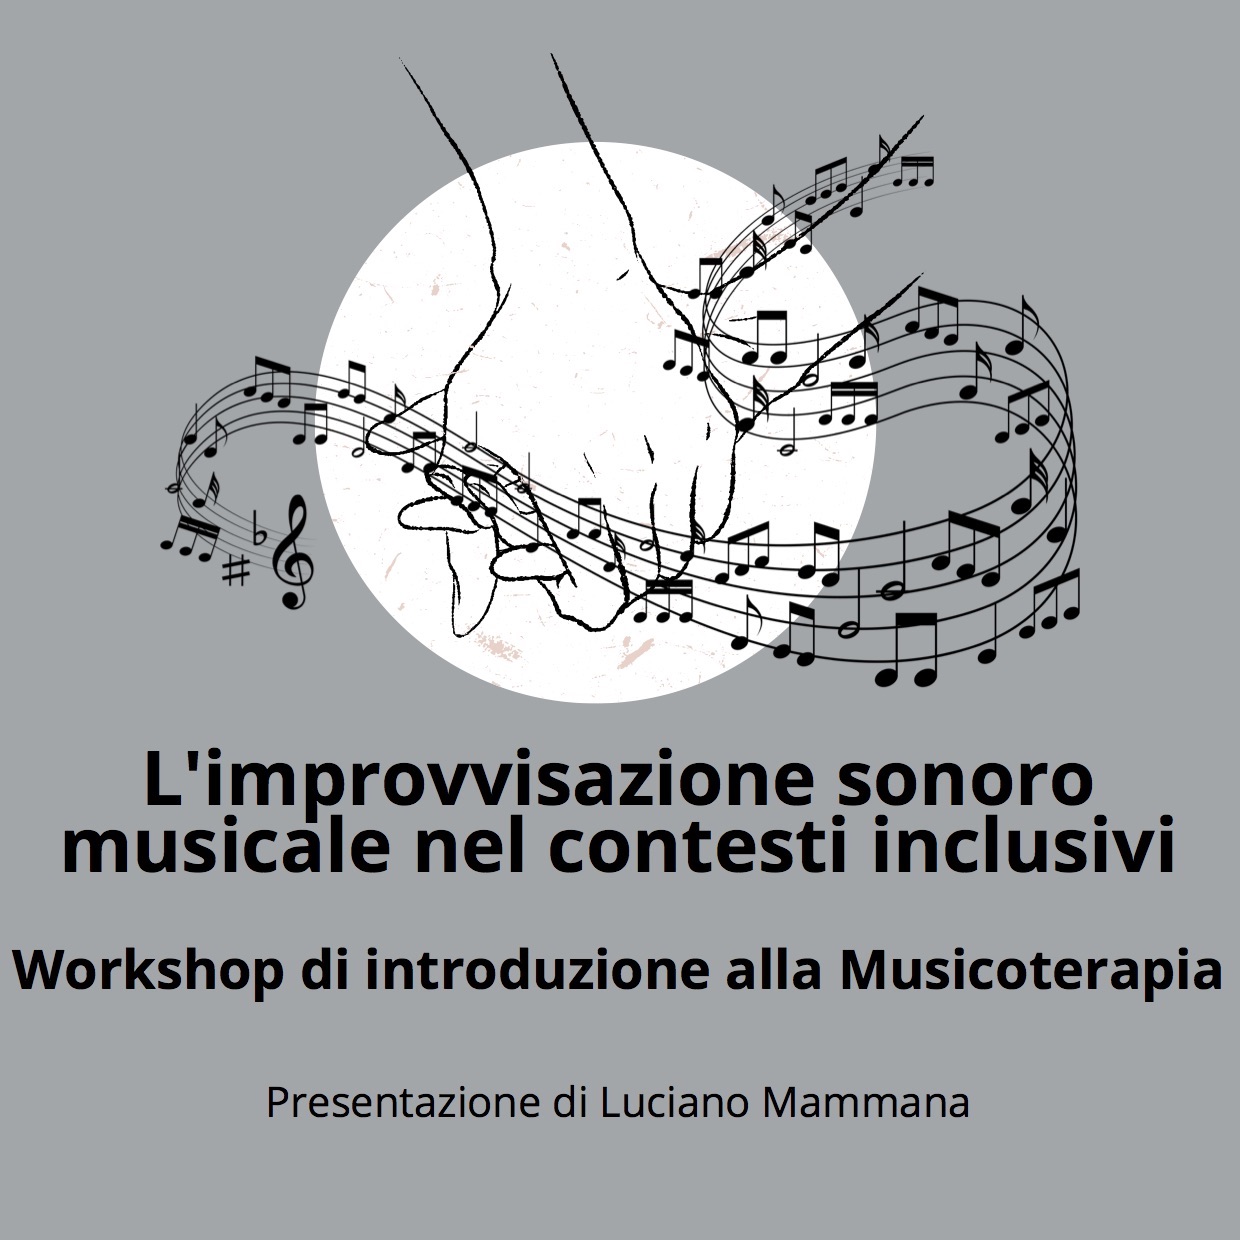 Workshop di introduzione alla Musicoterapia